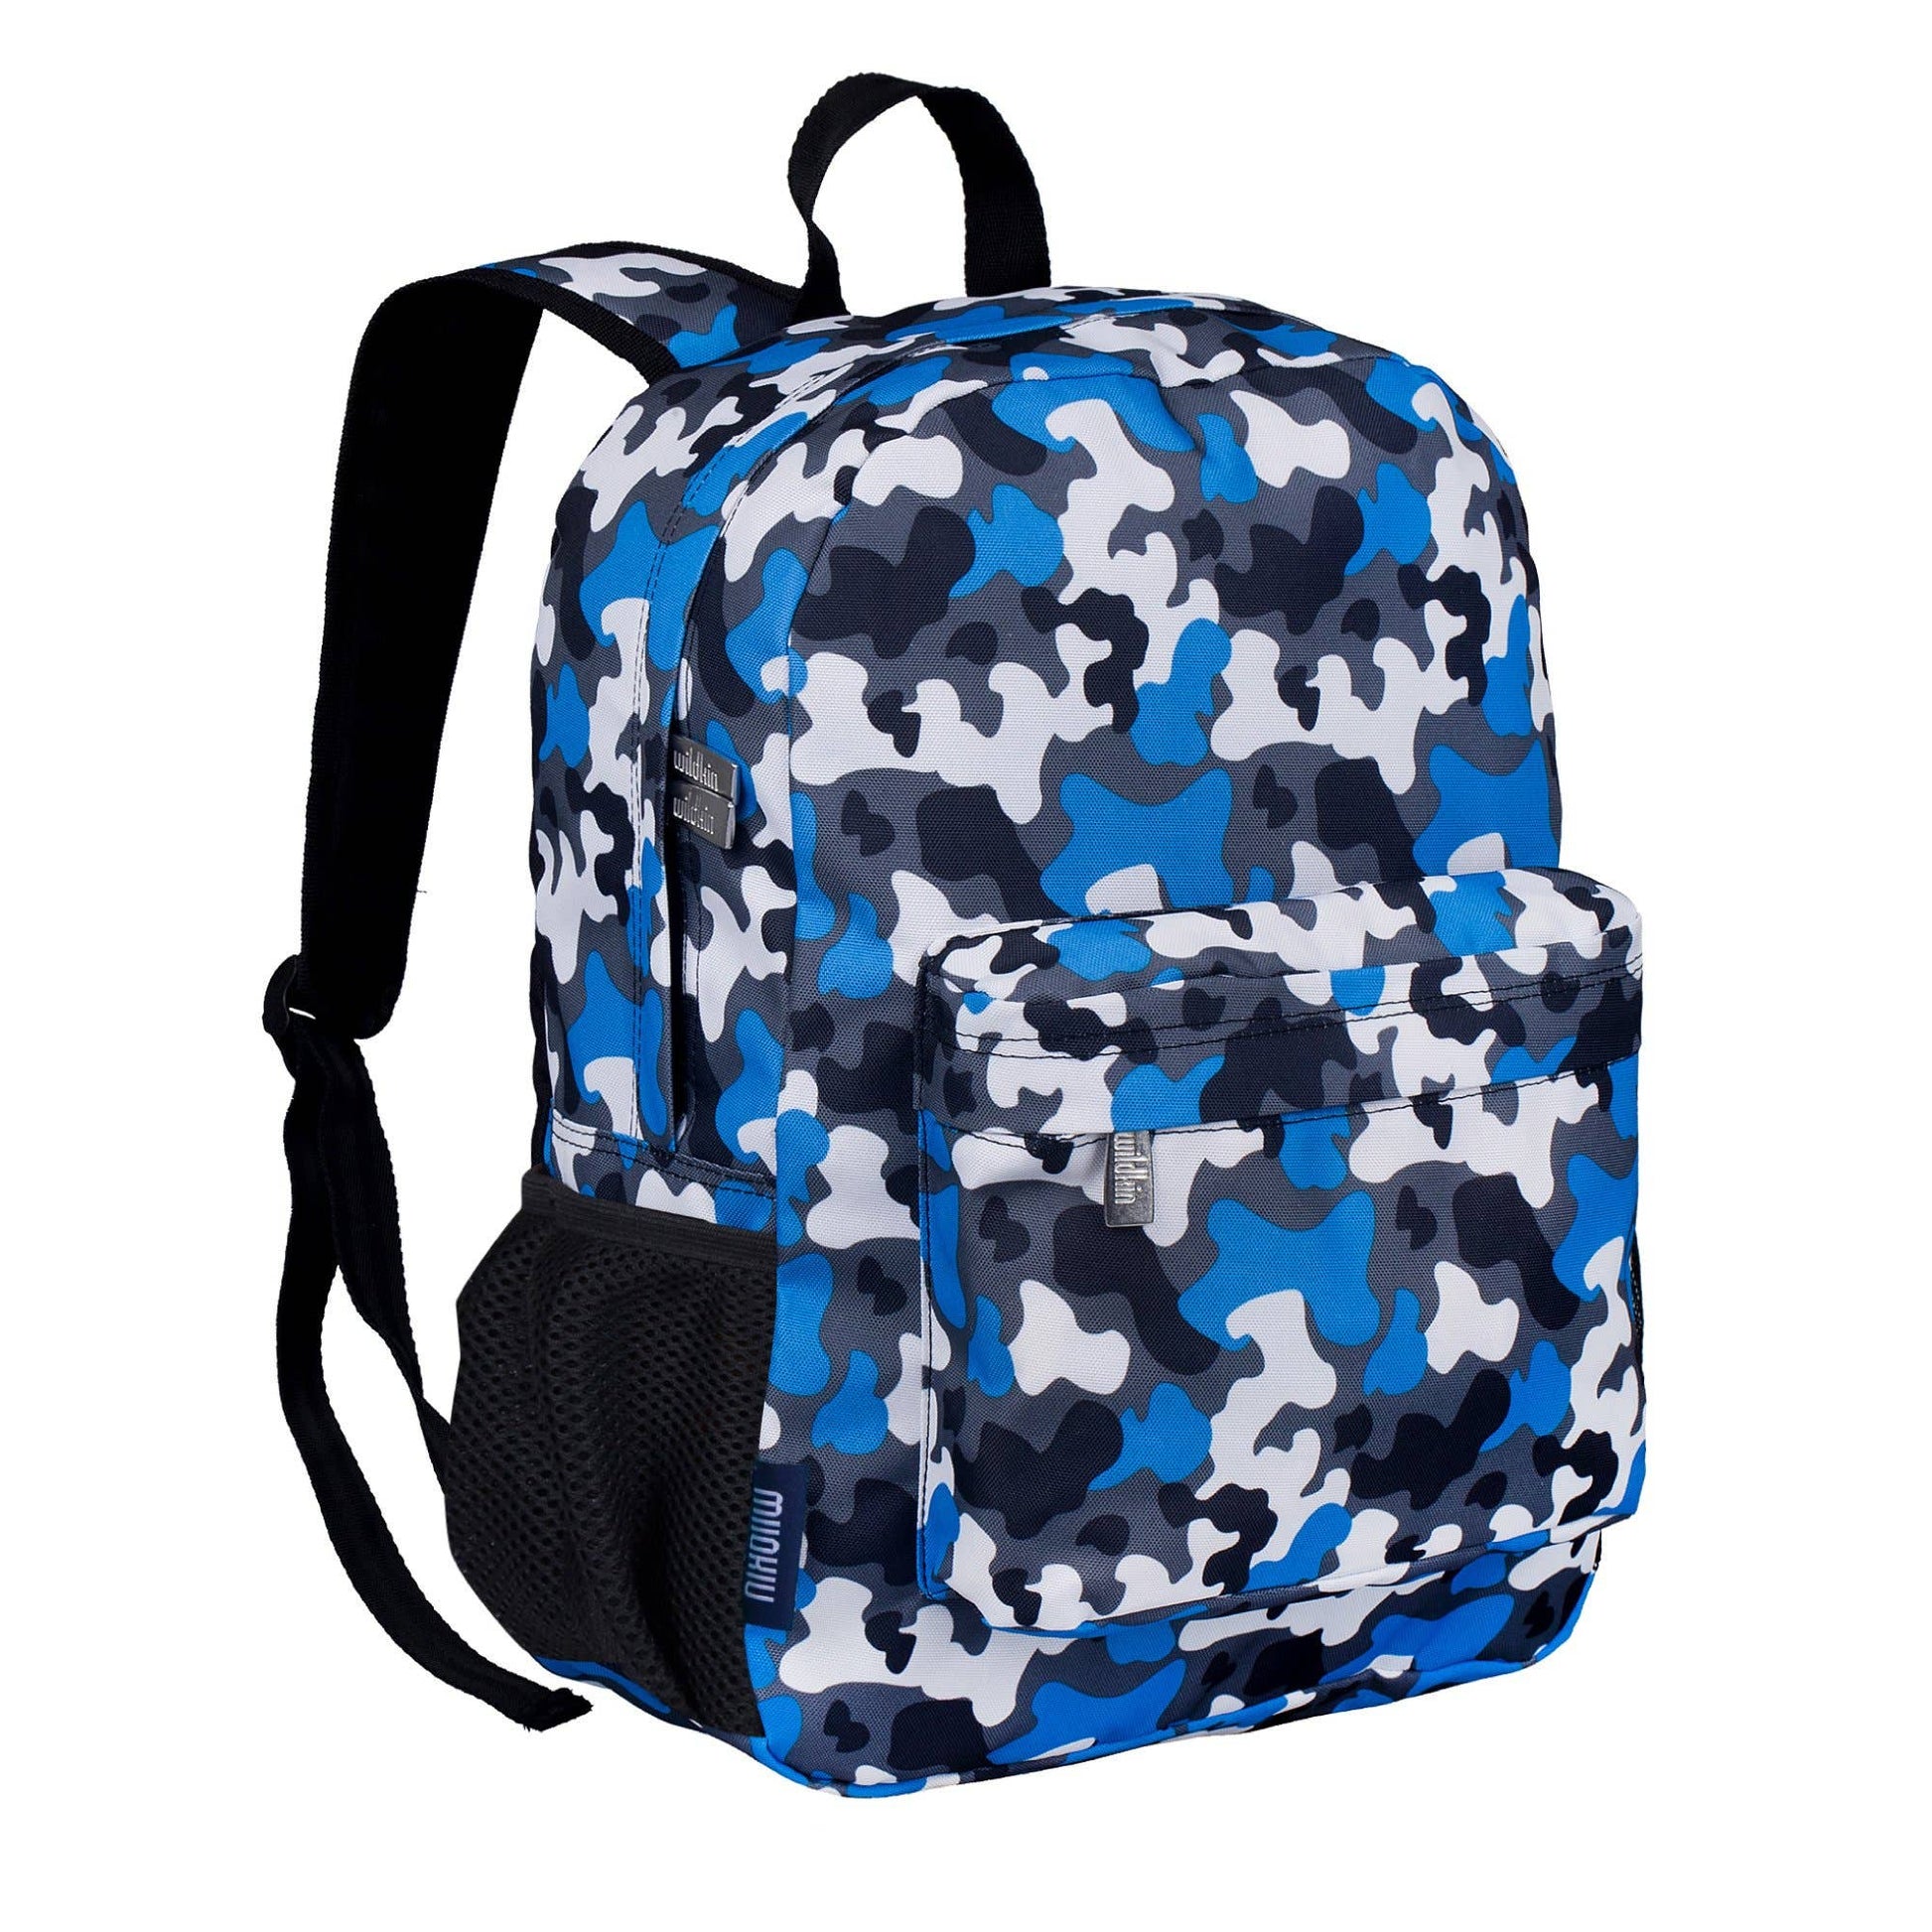 Wildkin Blue Camo Backpack 16"